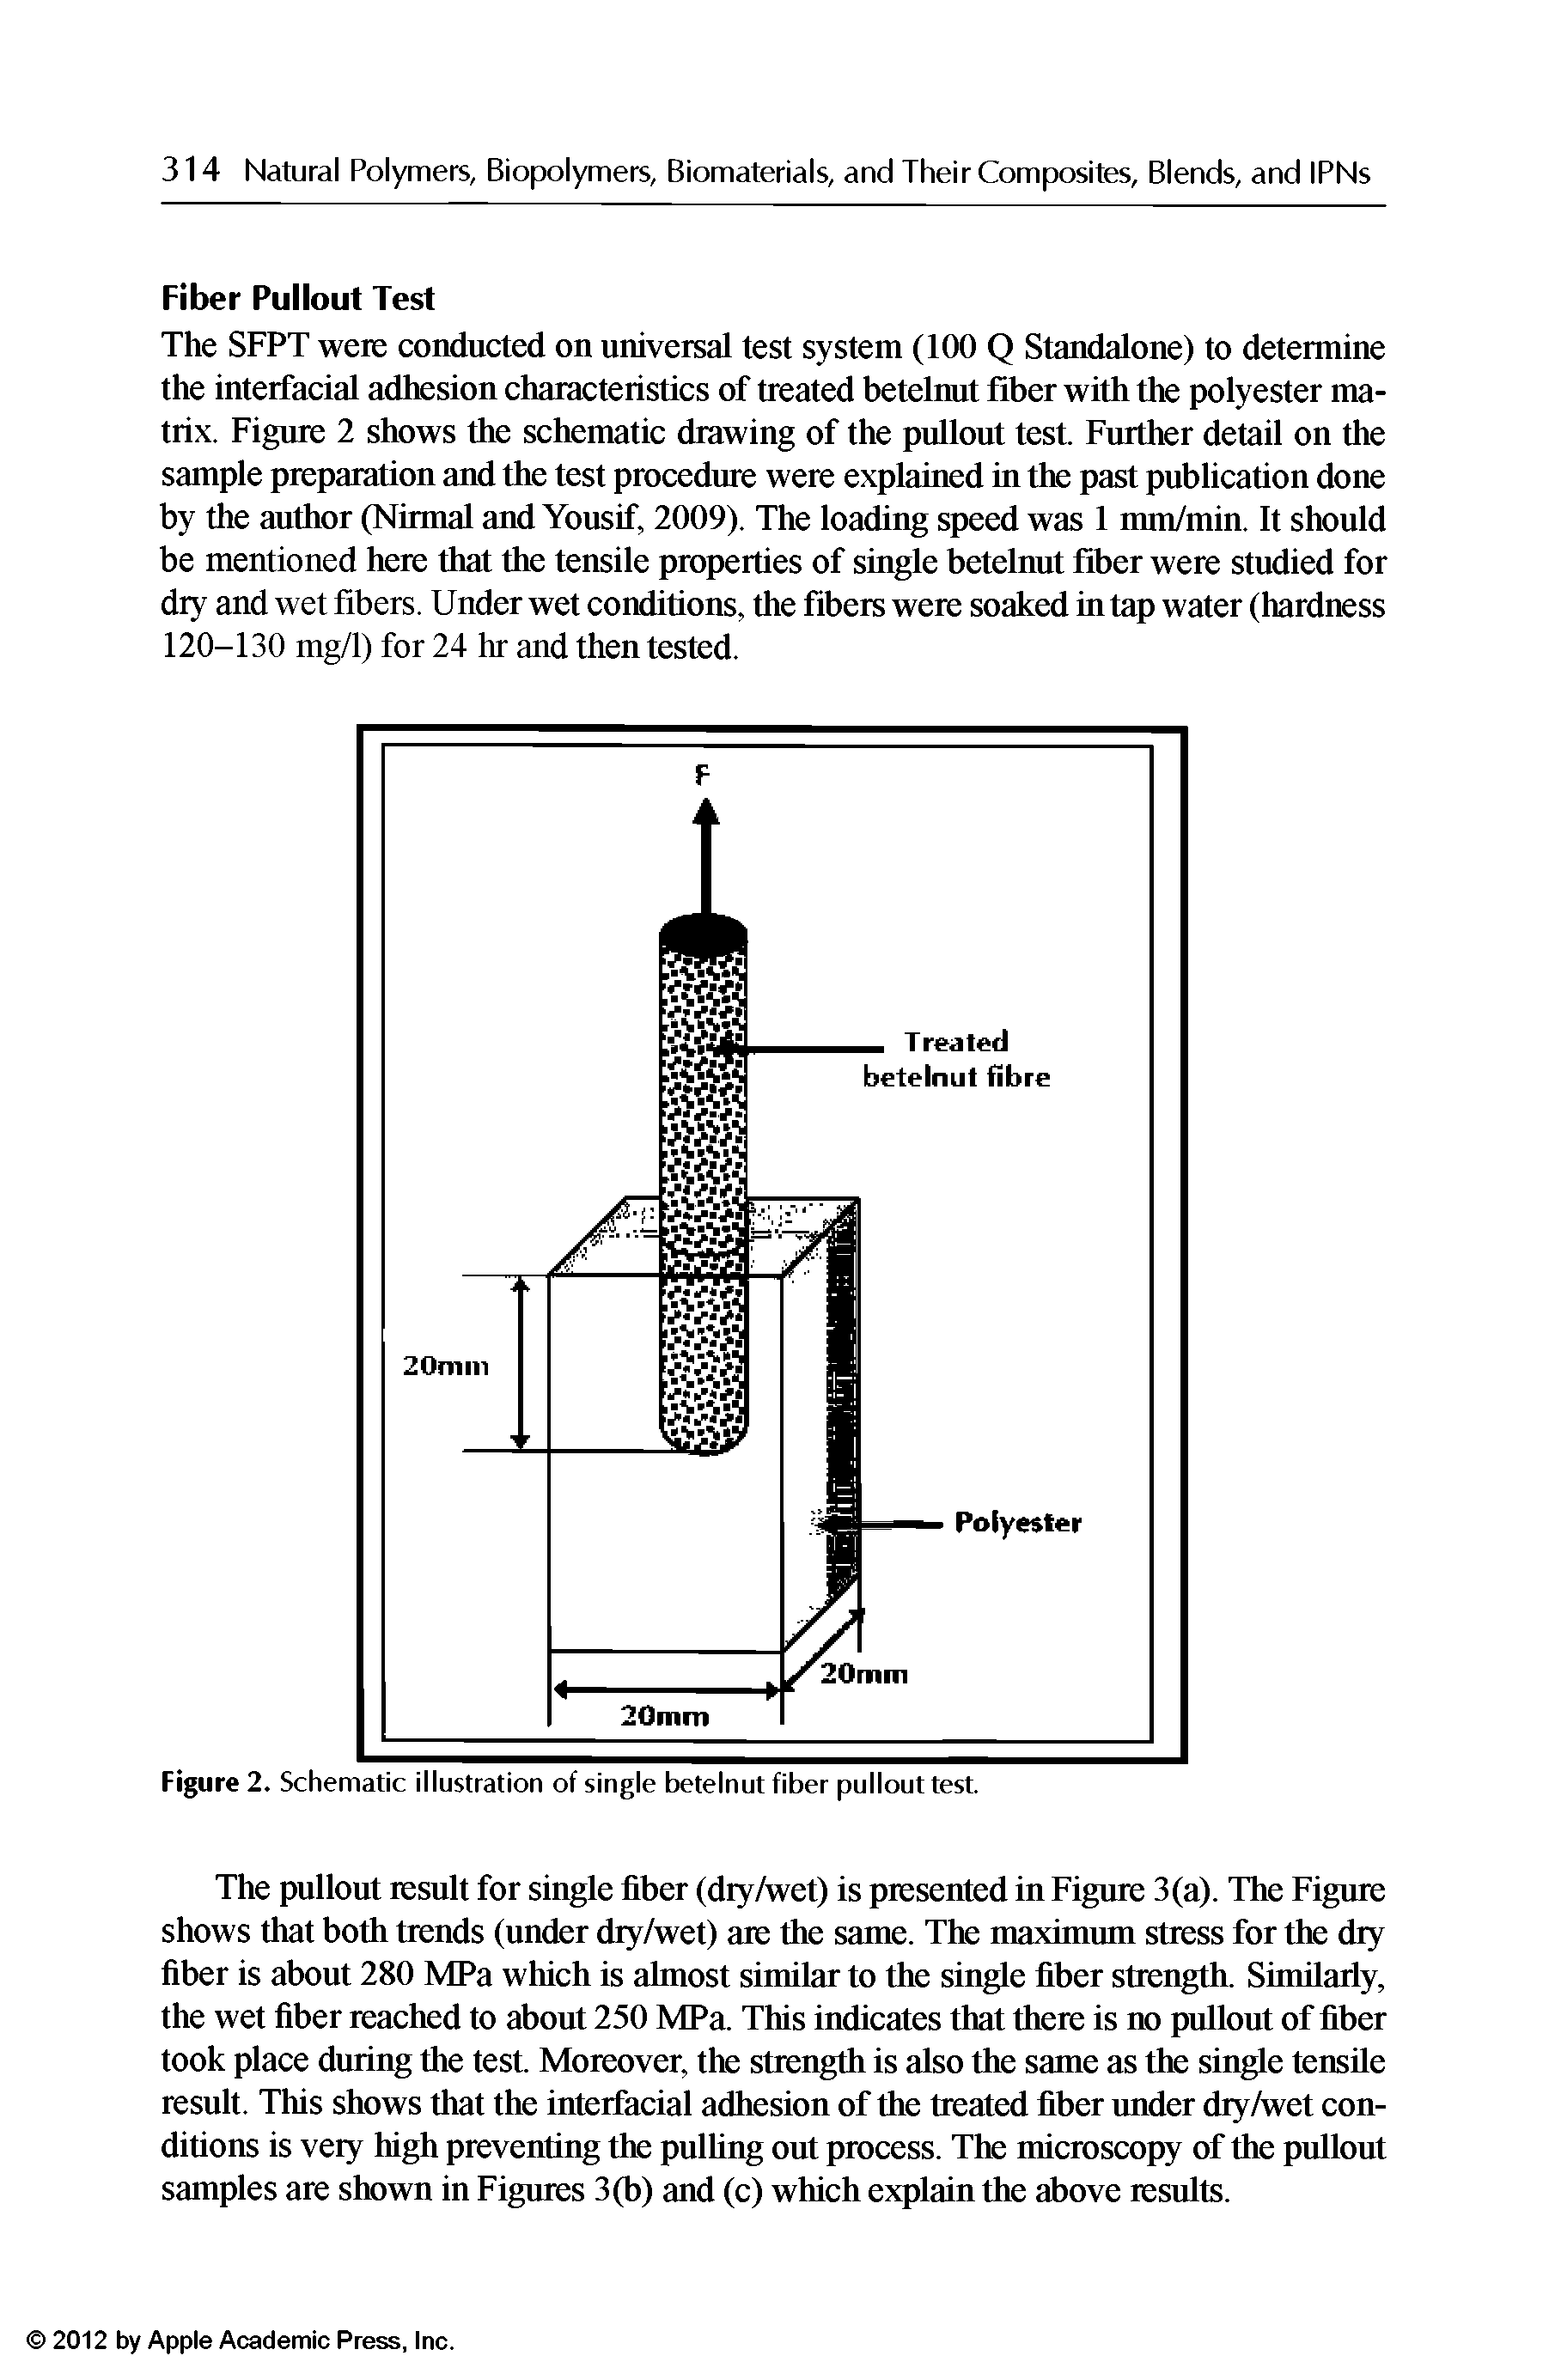 Figure 2. Schematic illustration of single betelnut fiber pullout test.